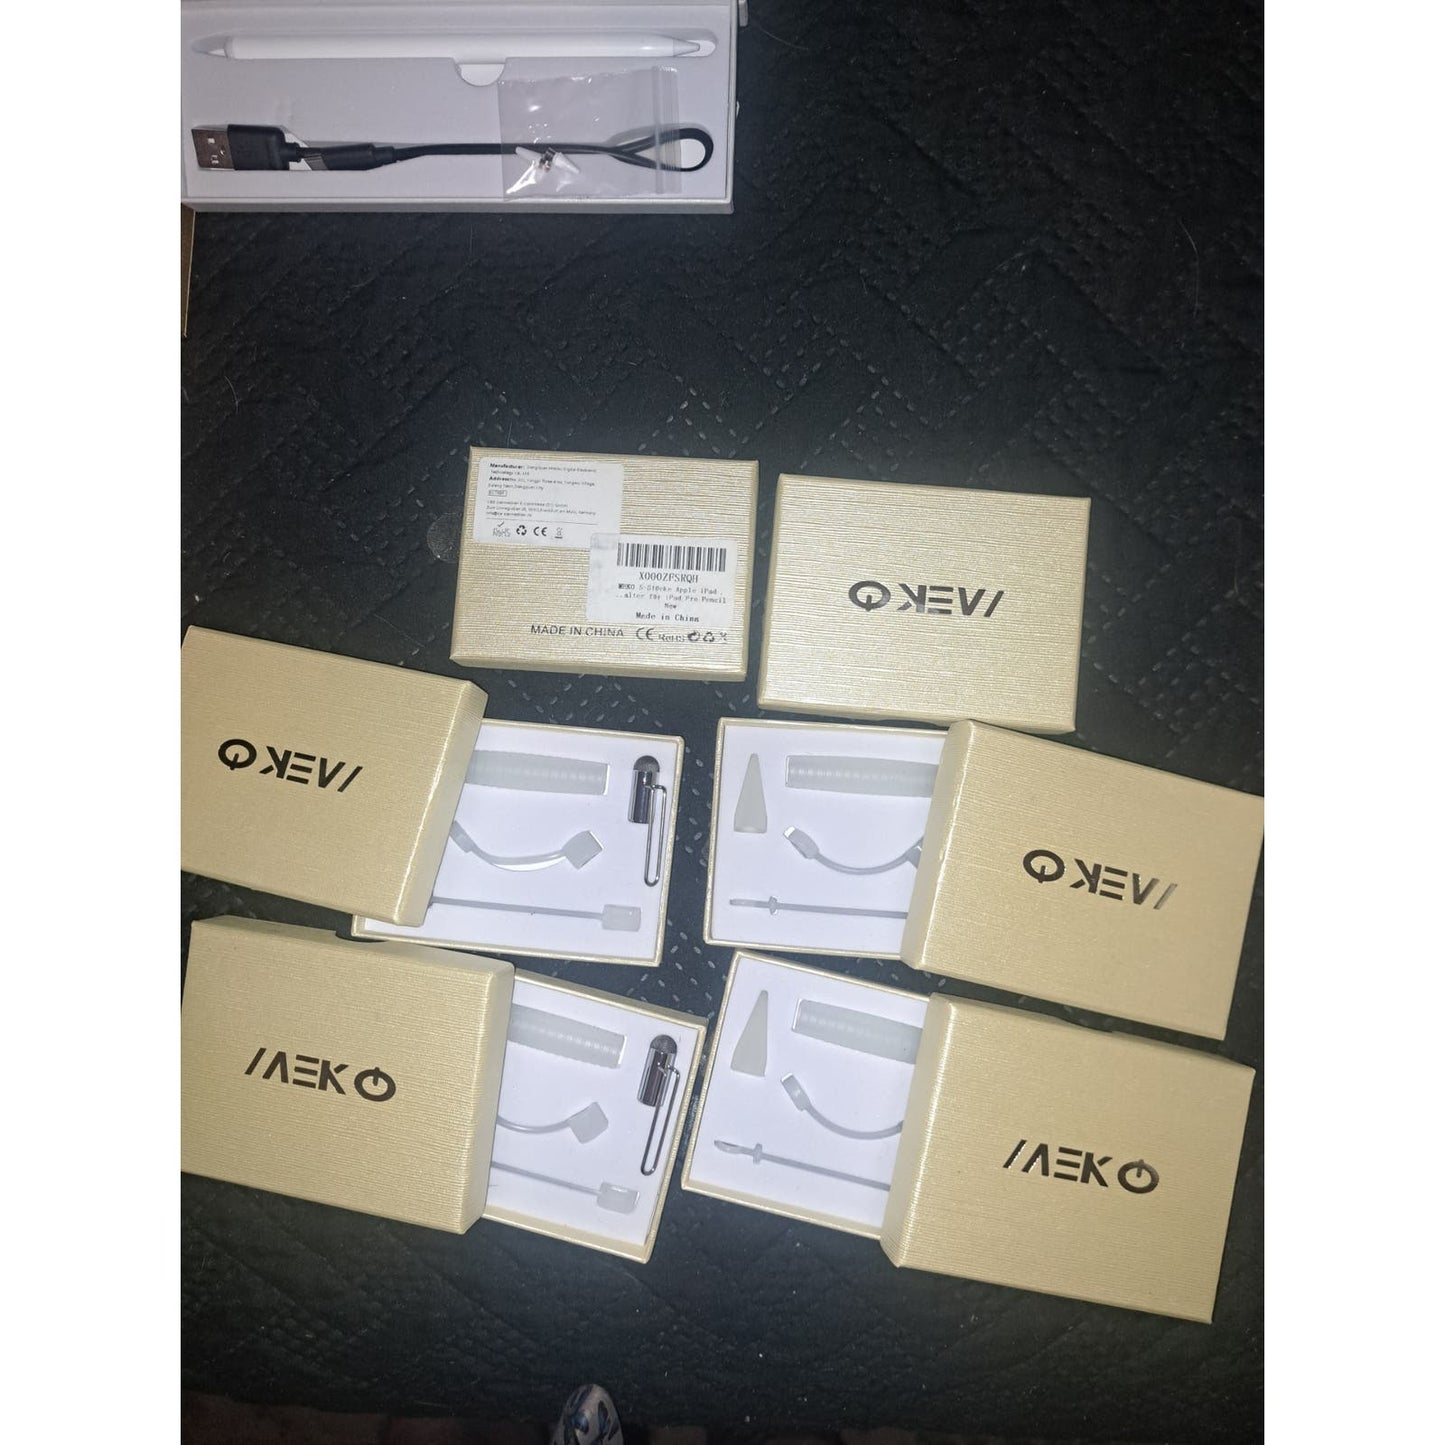 NIB- Lot of 12 Boxes MIKOO iPad Stylus Pens PLUS 4 MEKO Stylus Accessories